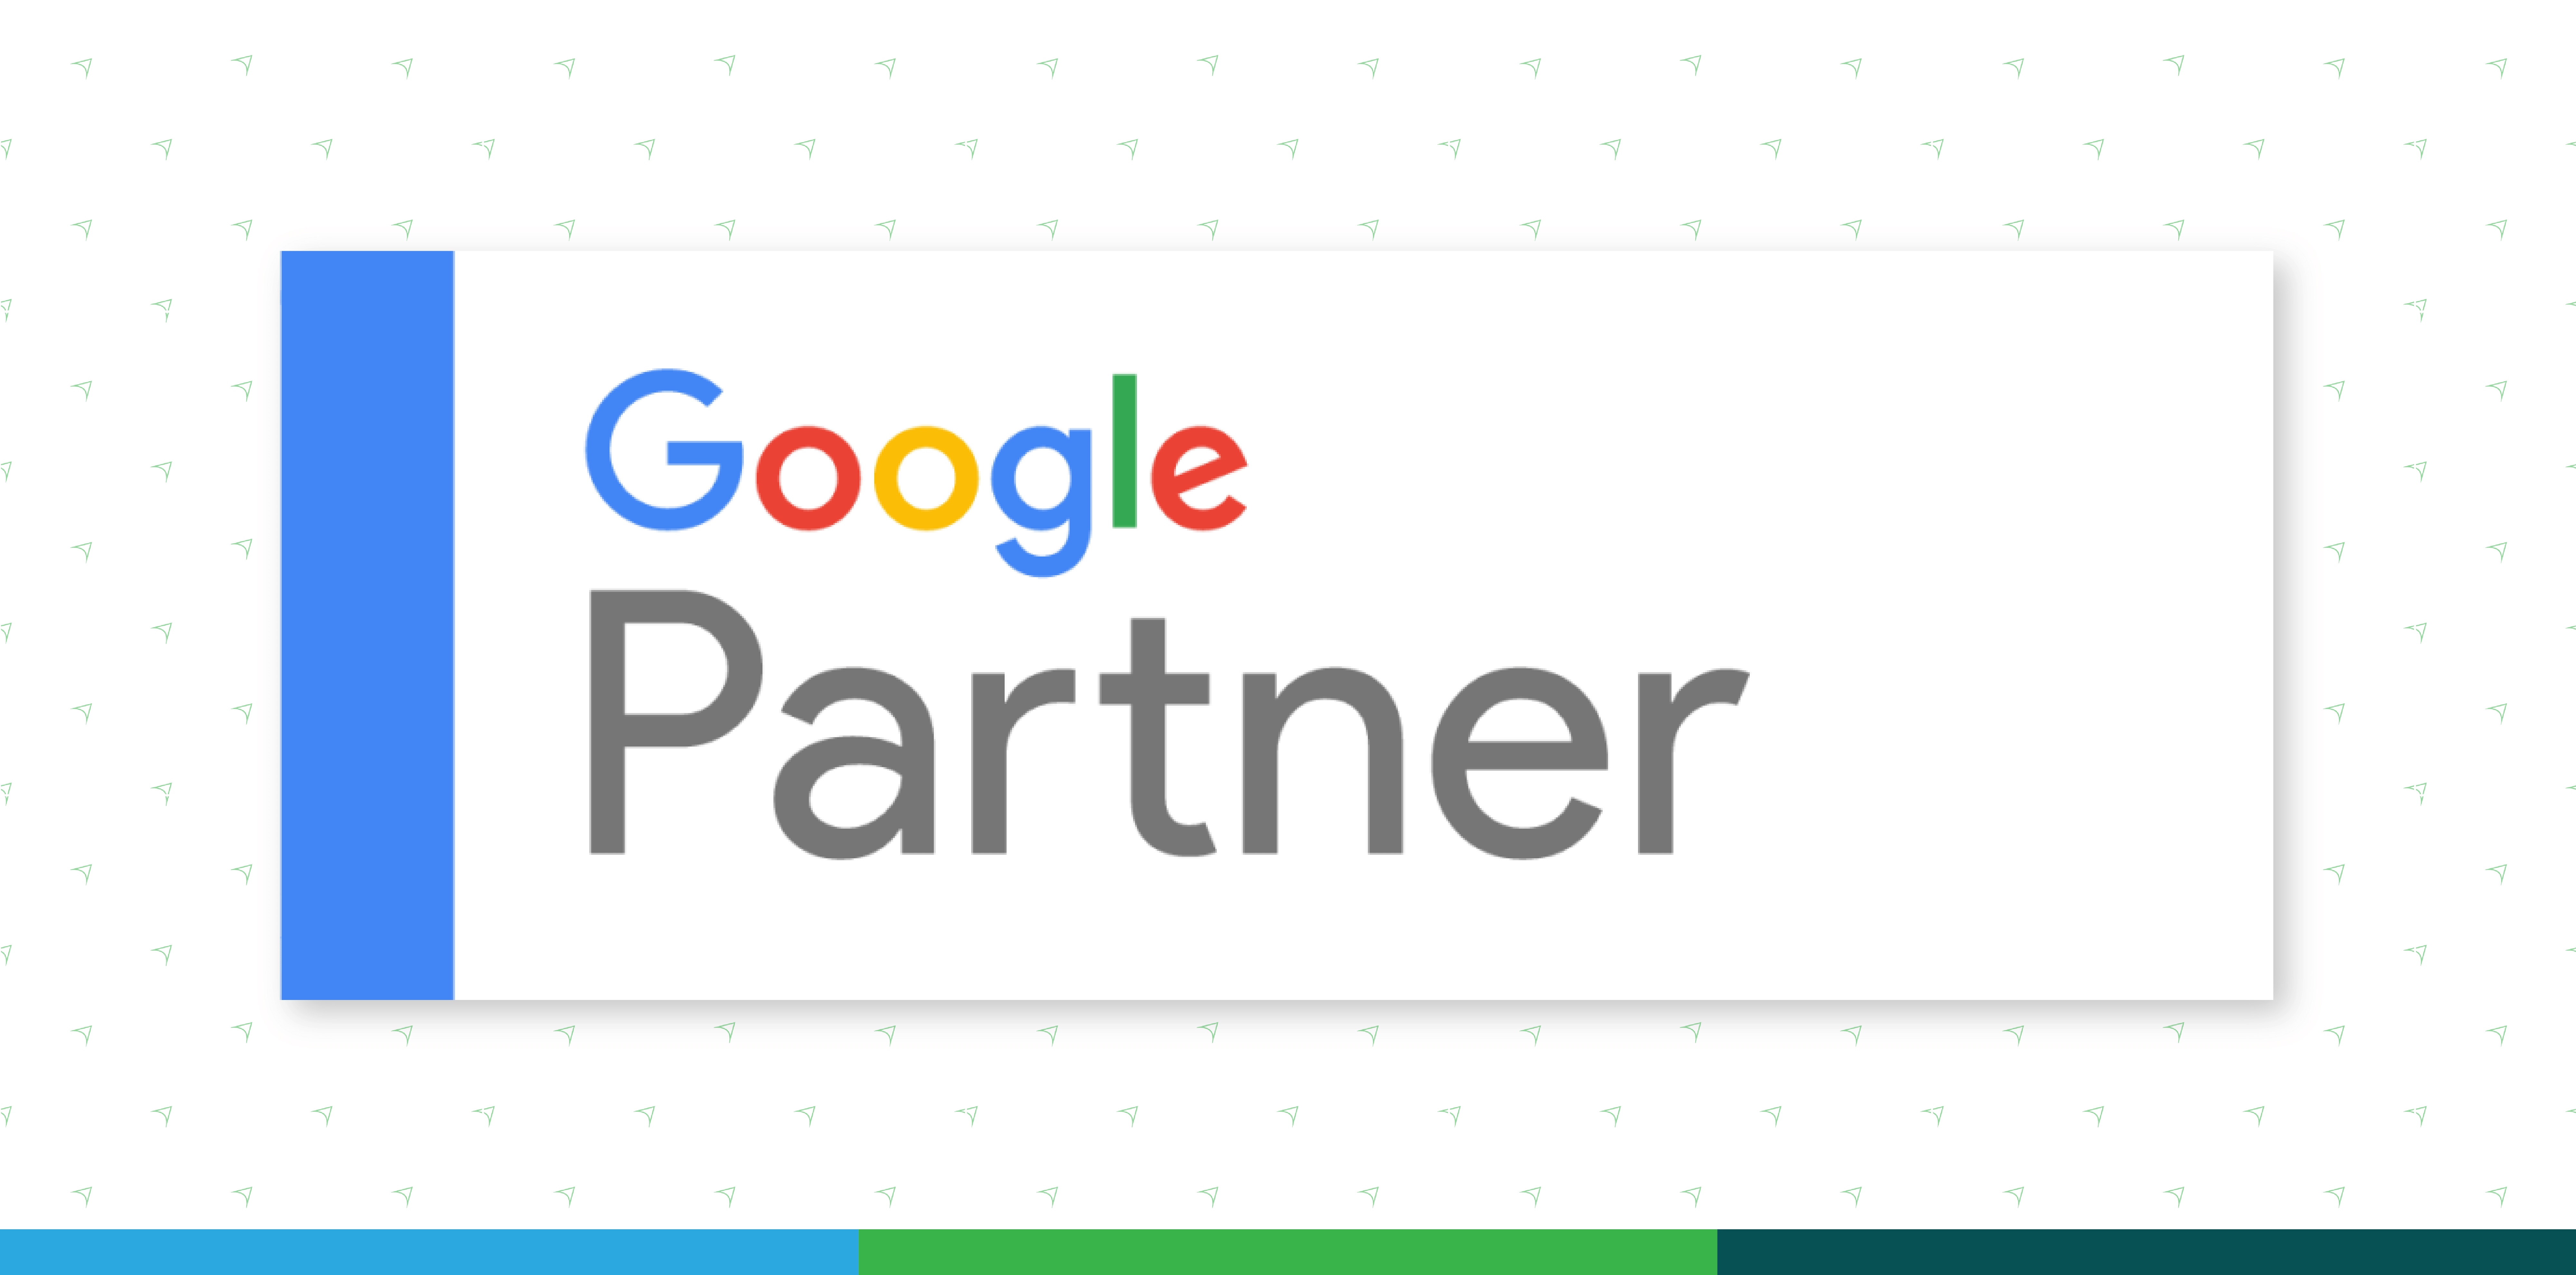 Google partner seal